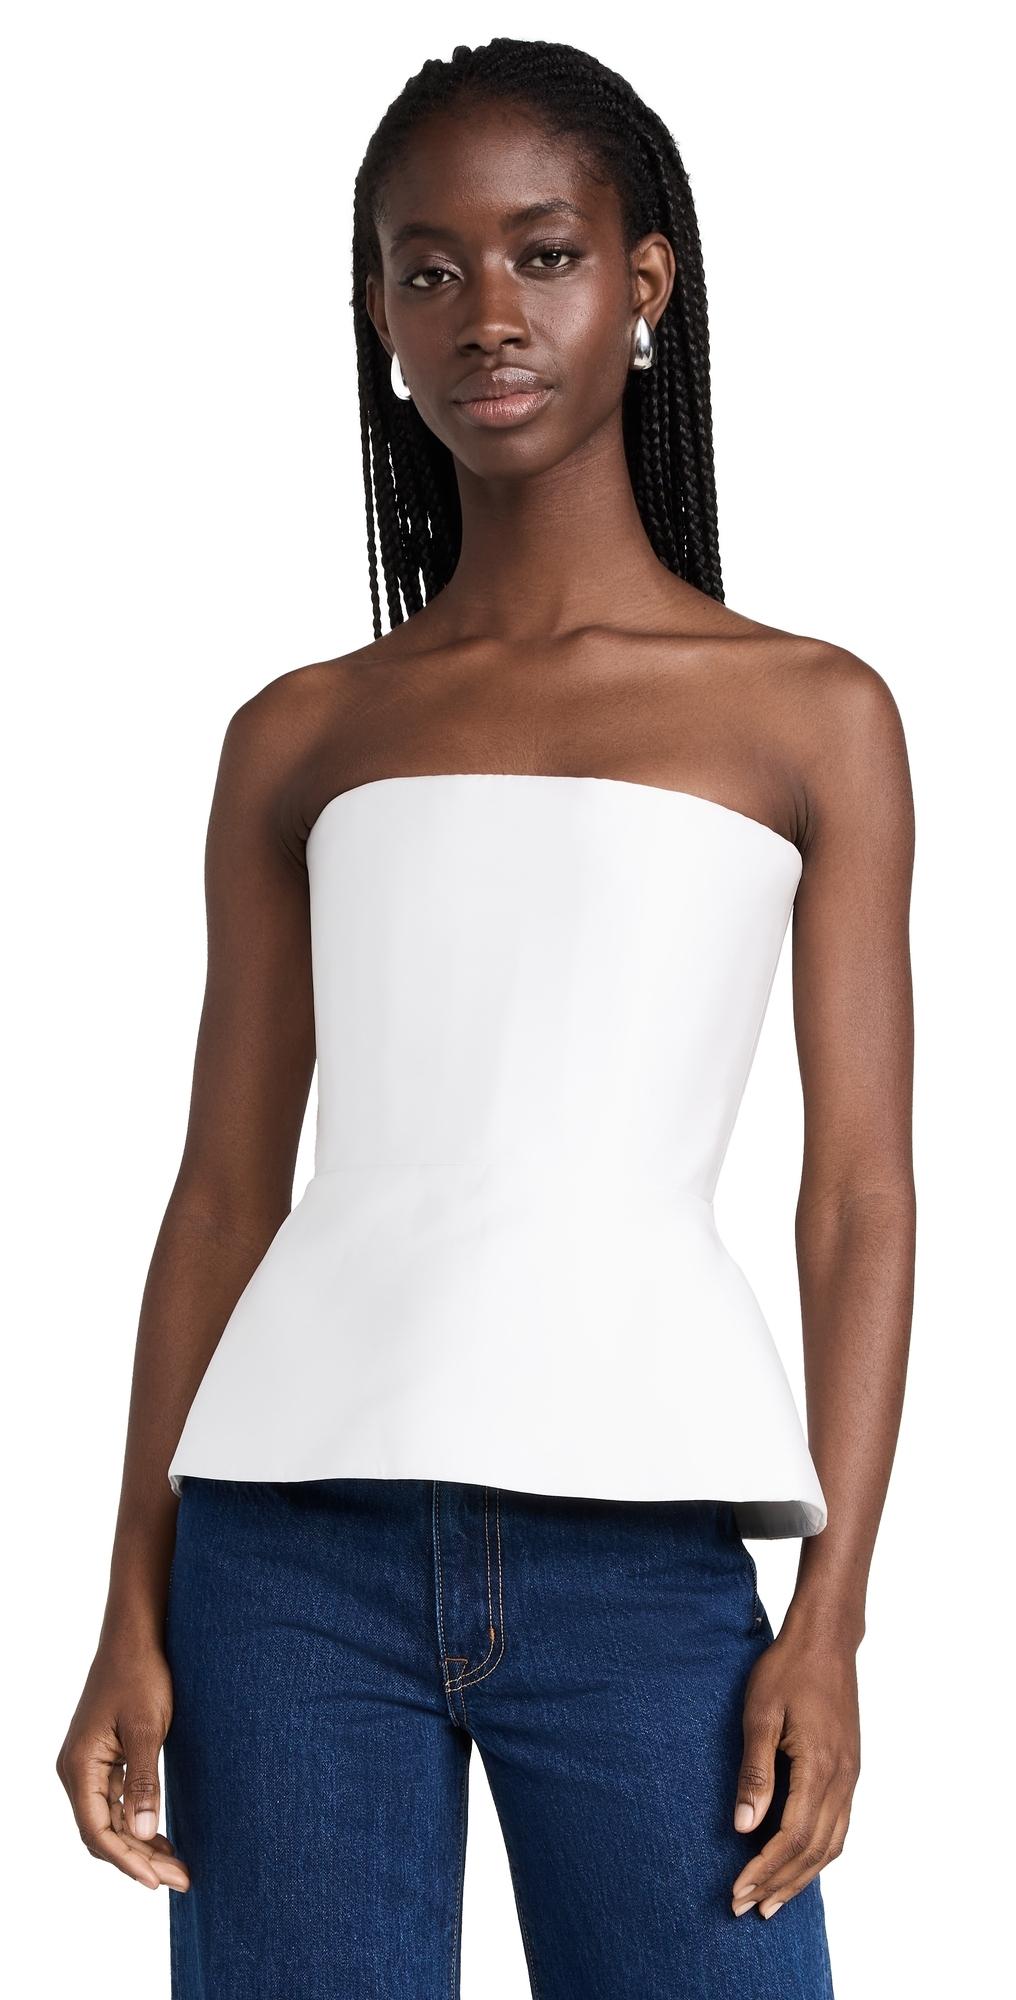 https://cdna.lystit.com/photos/shopbop/12a8506c/rozie-corsets-White-Satin-Peplum-Top.jpeg